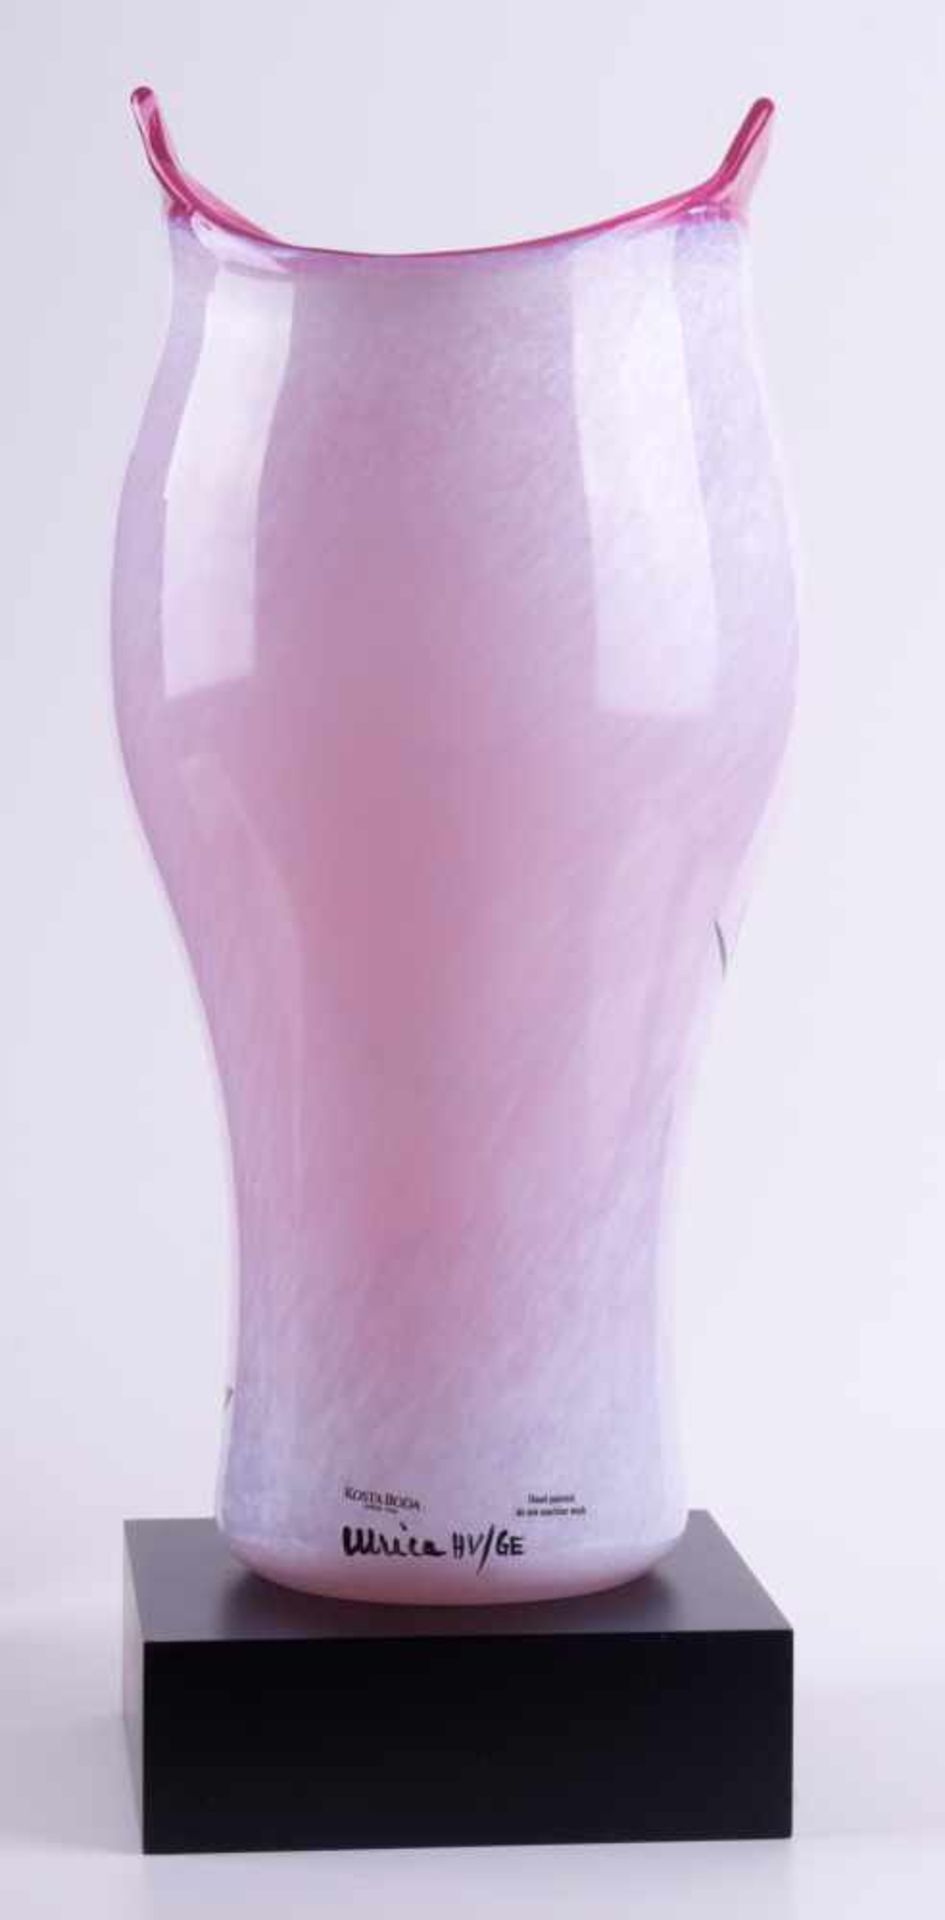 Kosta Boda OPEN MINDS Vase Ulrica Hydman-Vallien rosa, farbig staffiert, signiert, H: 36 cm, Kosta - Image 3 of 5